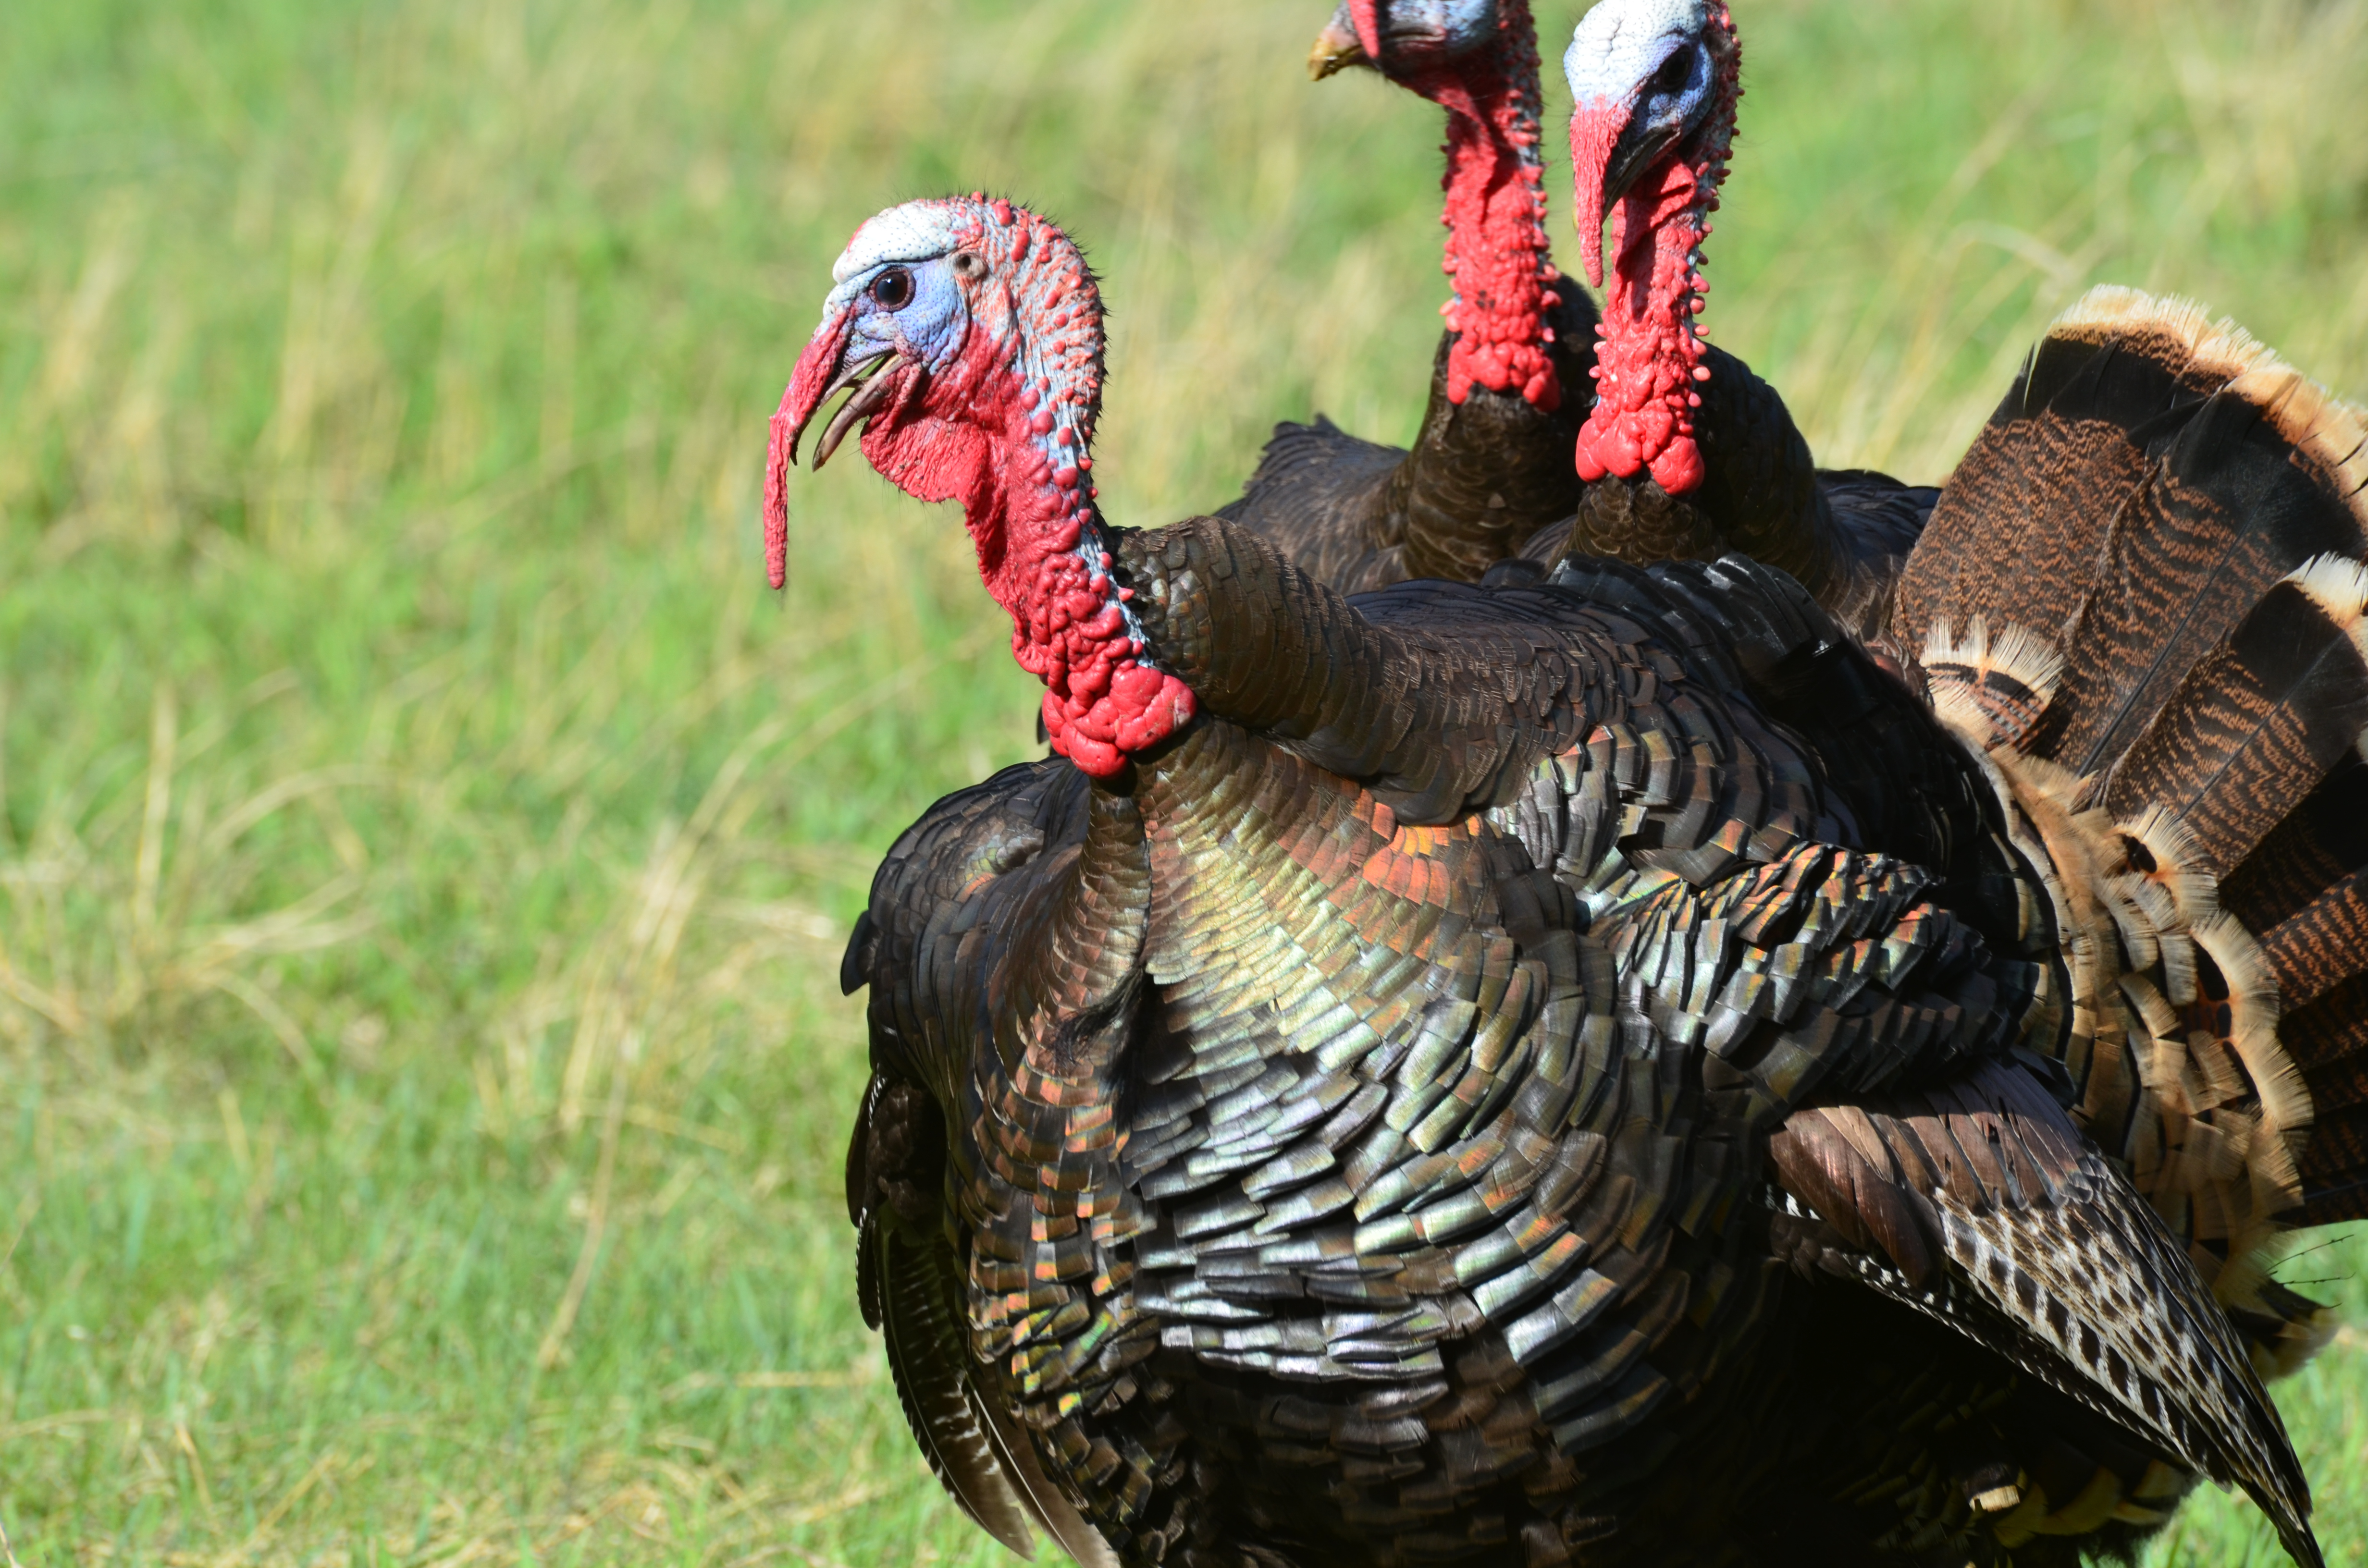 Three wild turkeys (fat brown ground birds) stand together, with their necks red and wattled.